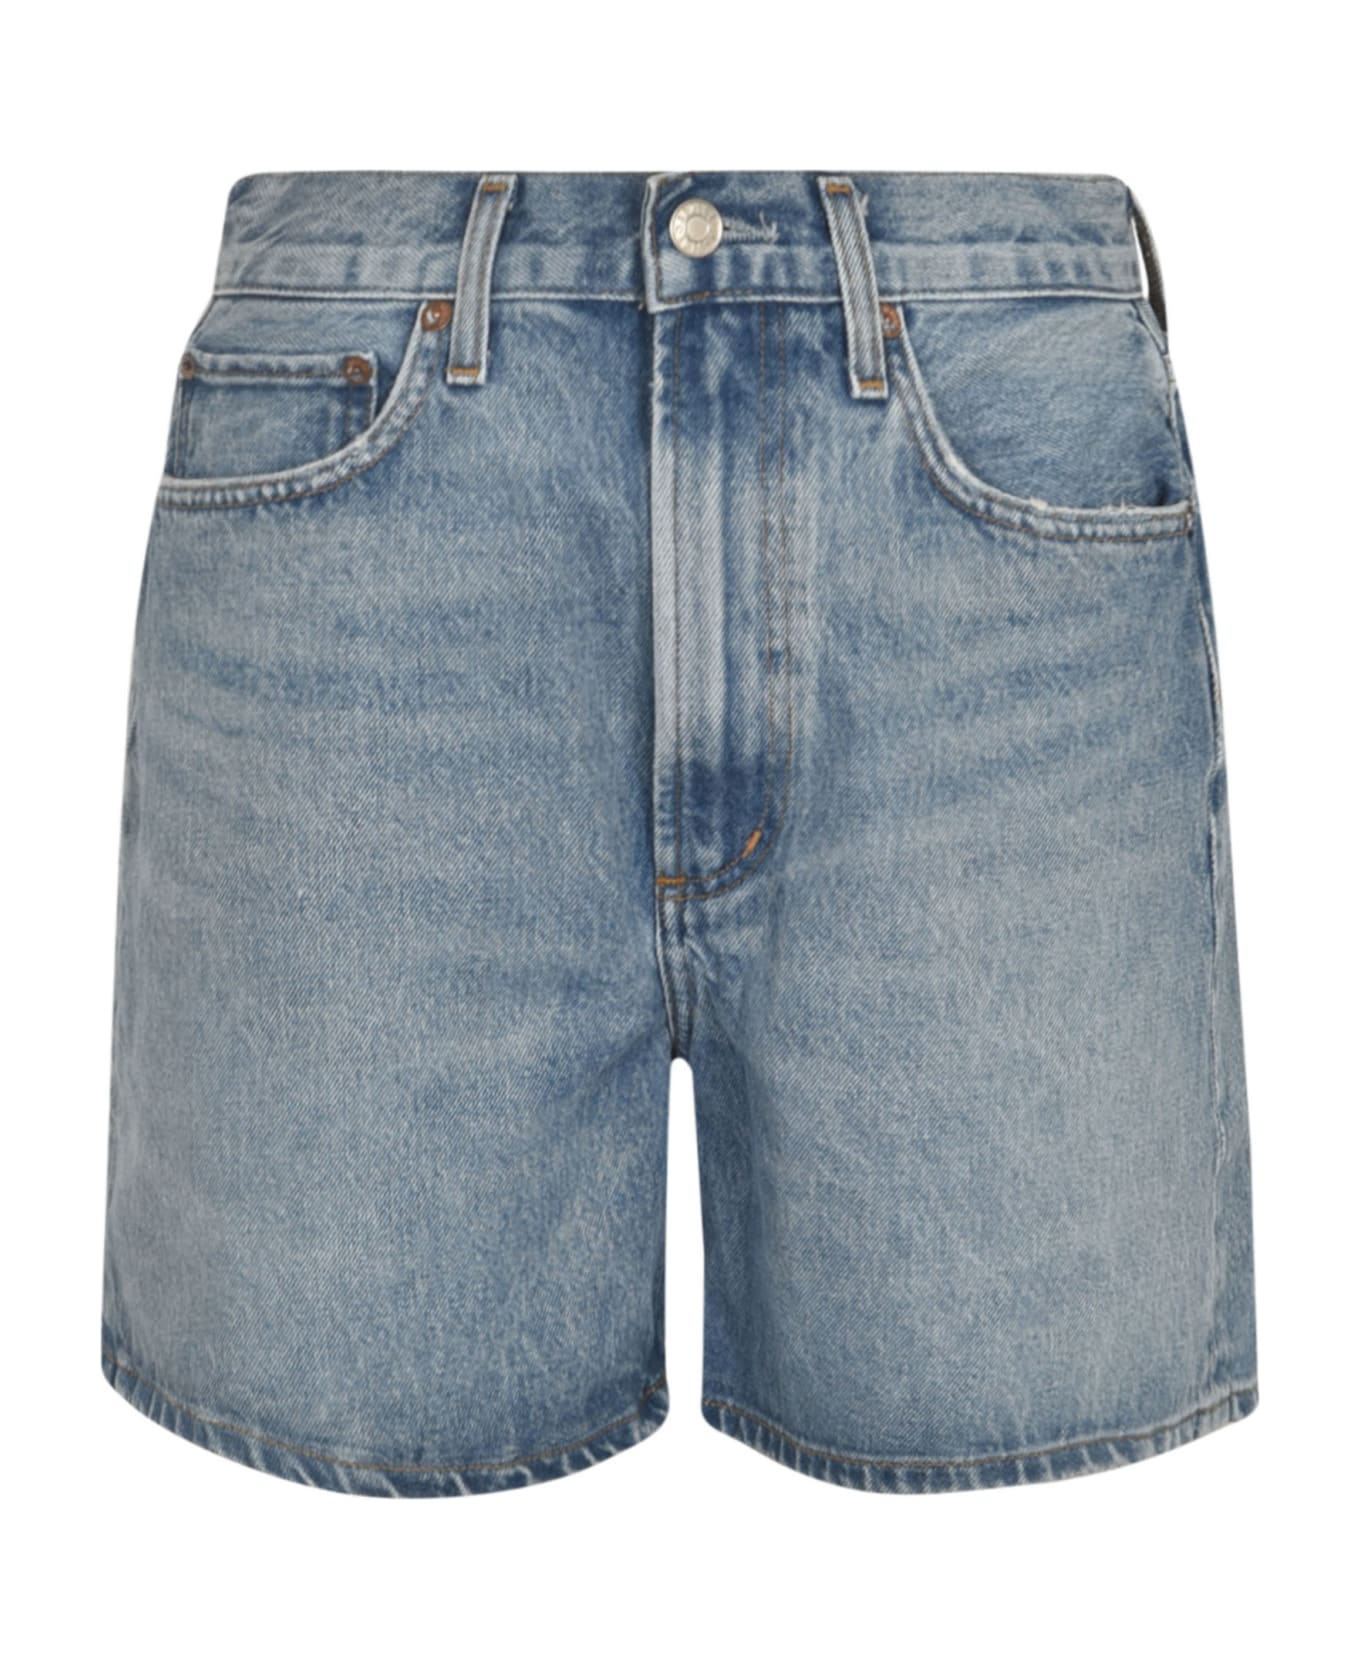 AGOLDE Buttoned Denim Shorts - MODE ショートパンツ